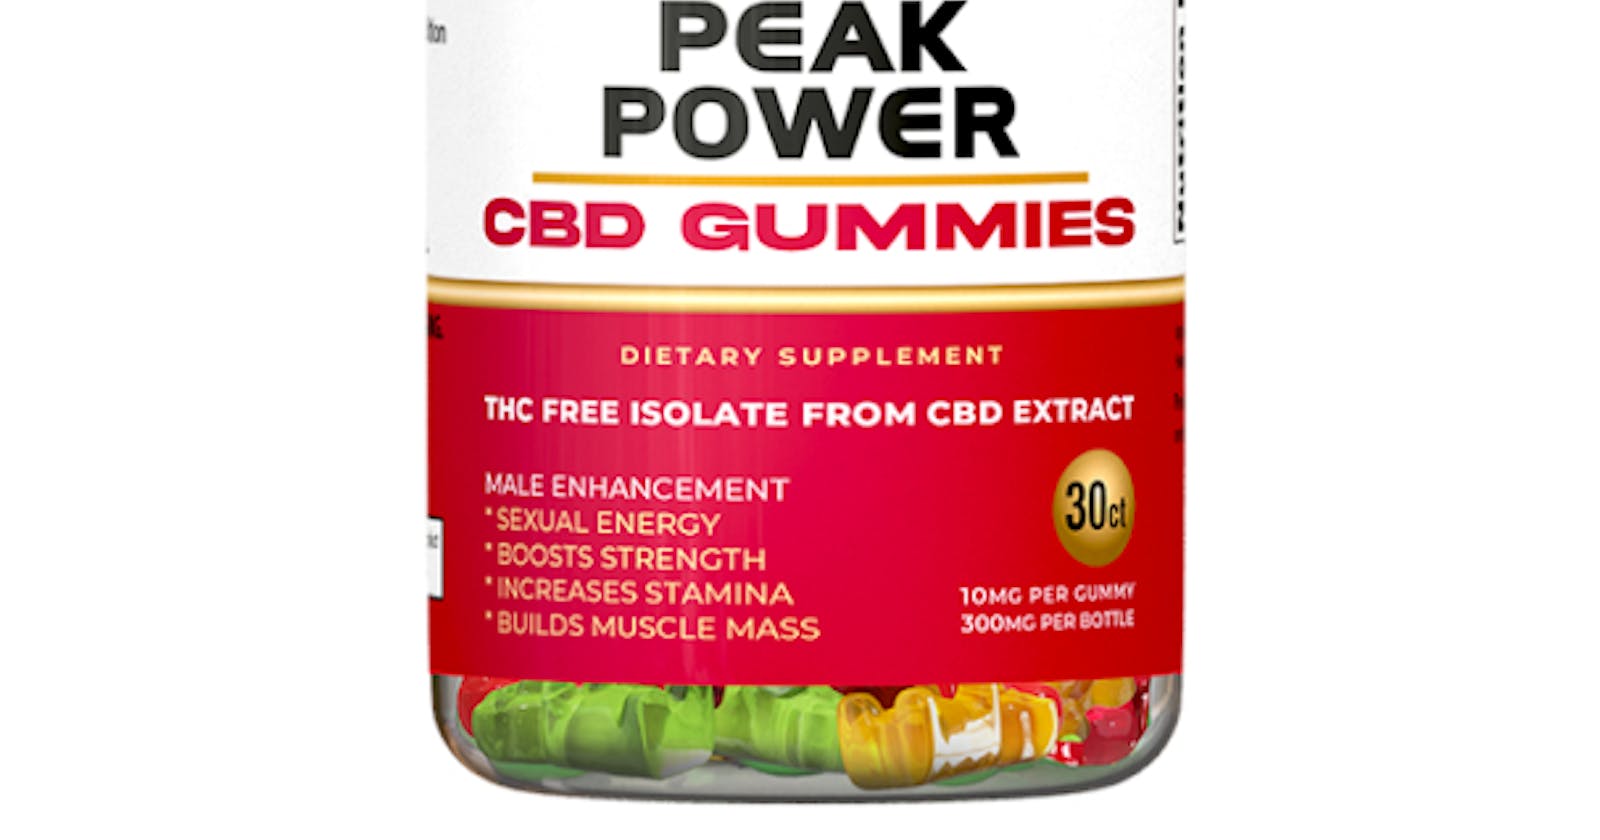 Find Your Peak State of Mind with Peak Power CBD Gummies